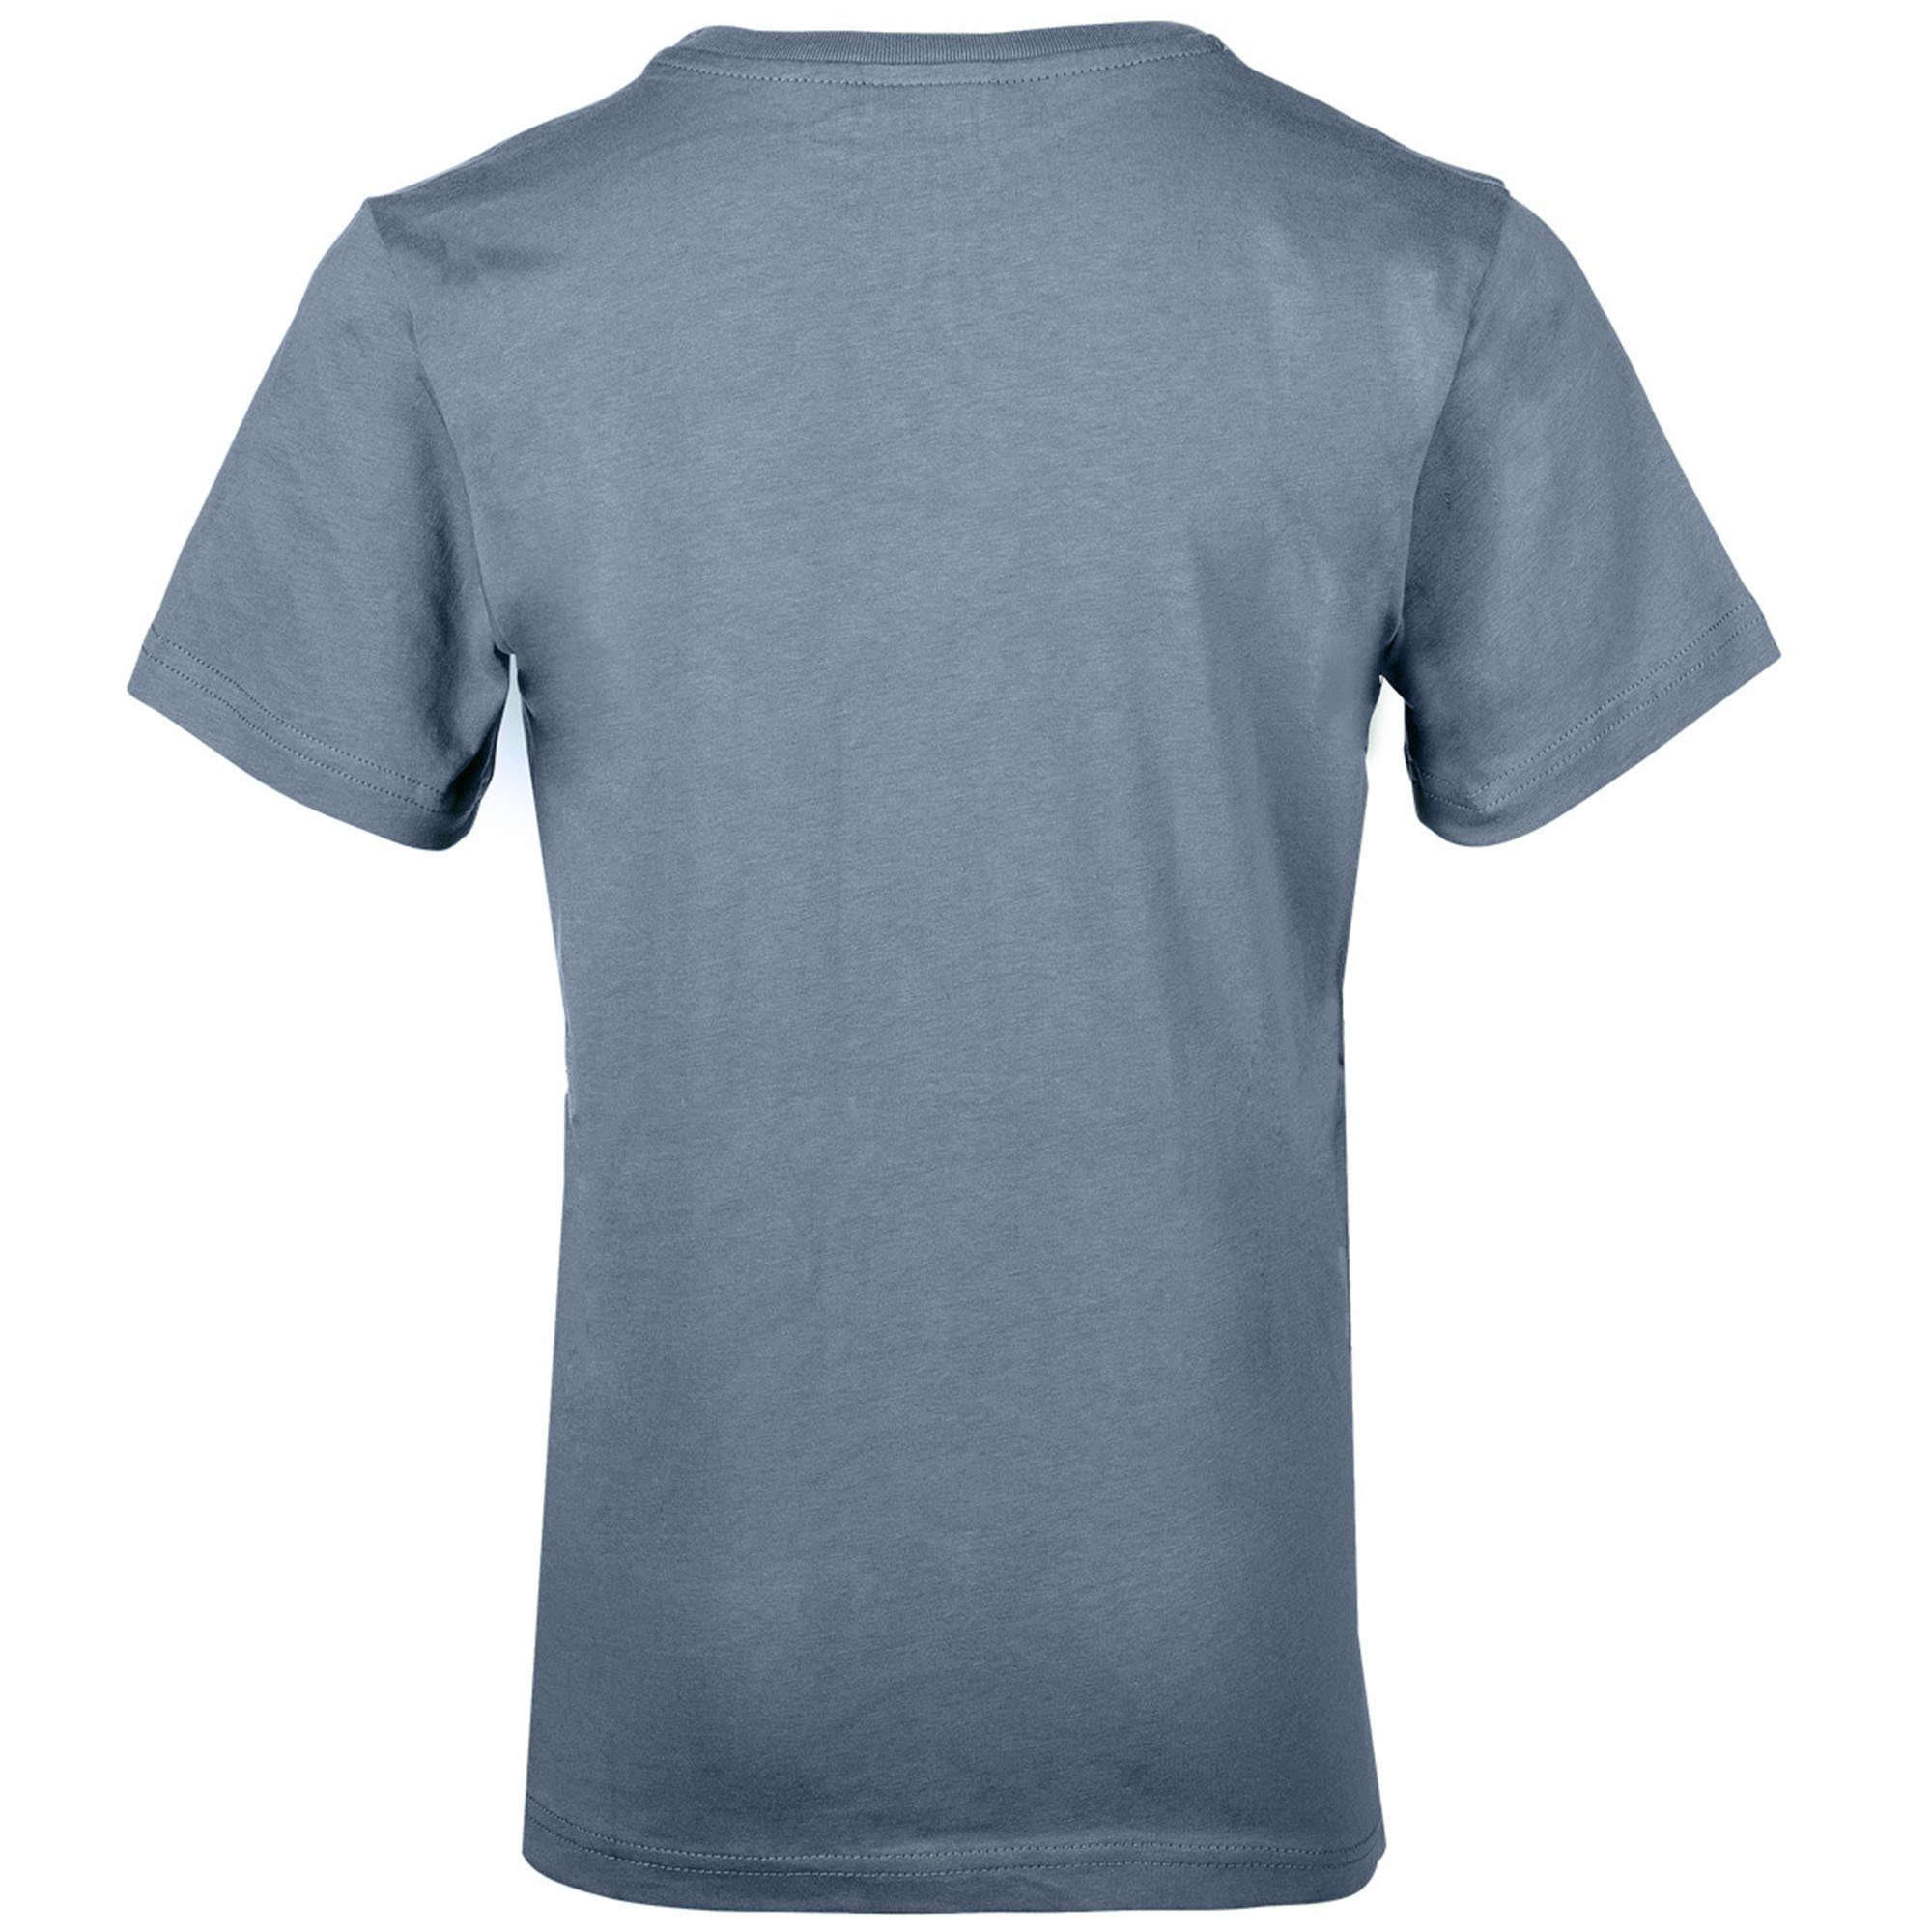 Unisex - Champion T-Shirt Kinder T-Shirt Rundhals Blaugrau Crewneck,